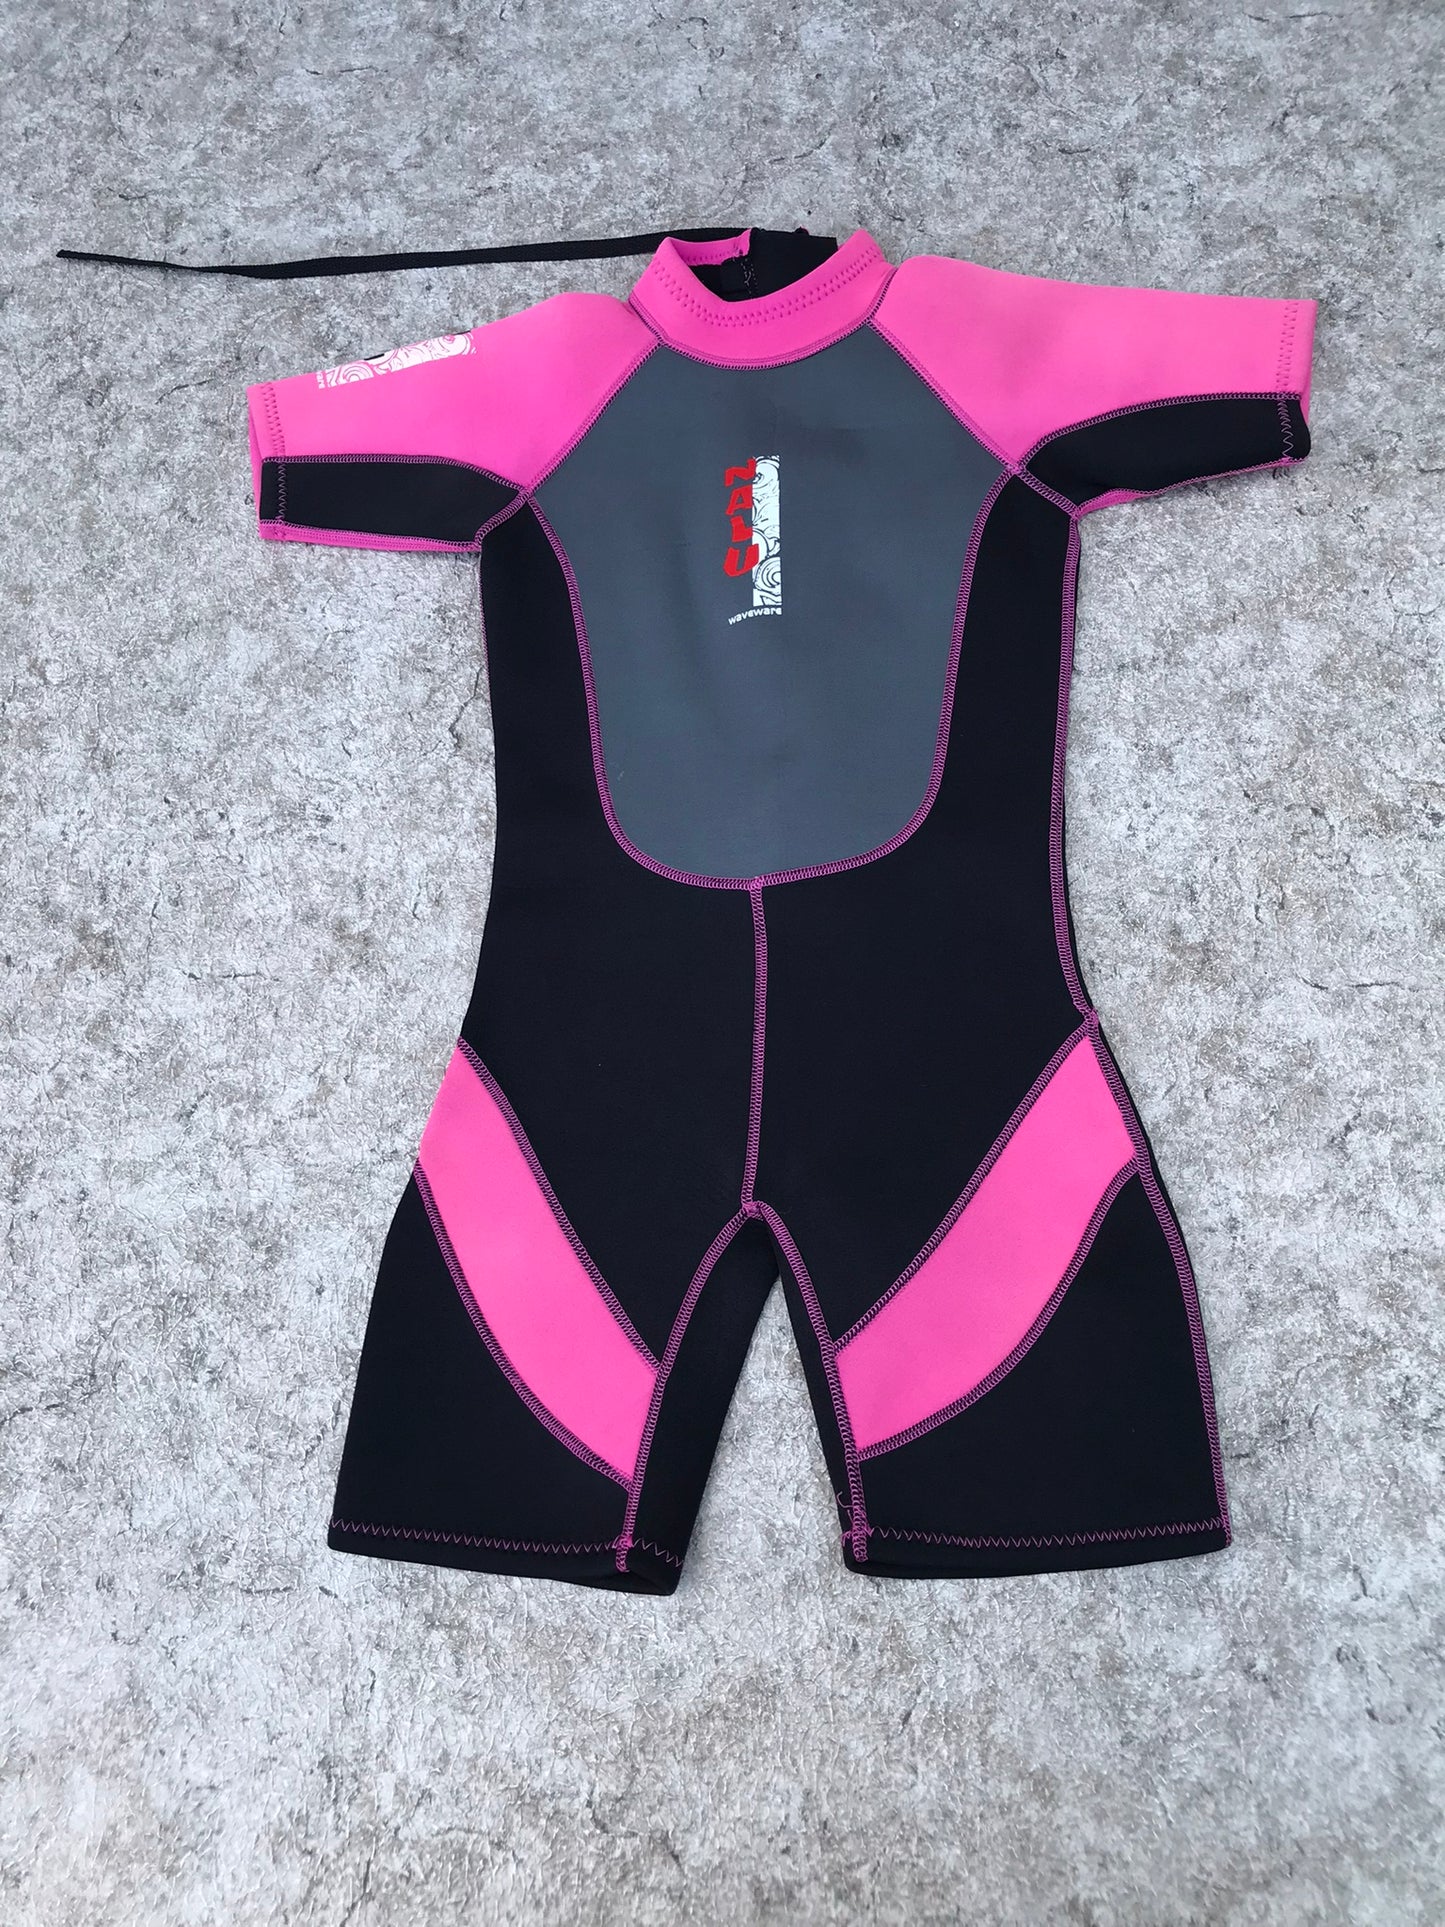 Wetsuit Child Size 10-12 Wavewear Pink Grey 2-3 mm Neoprene Excellent